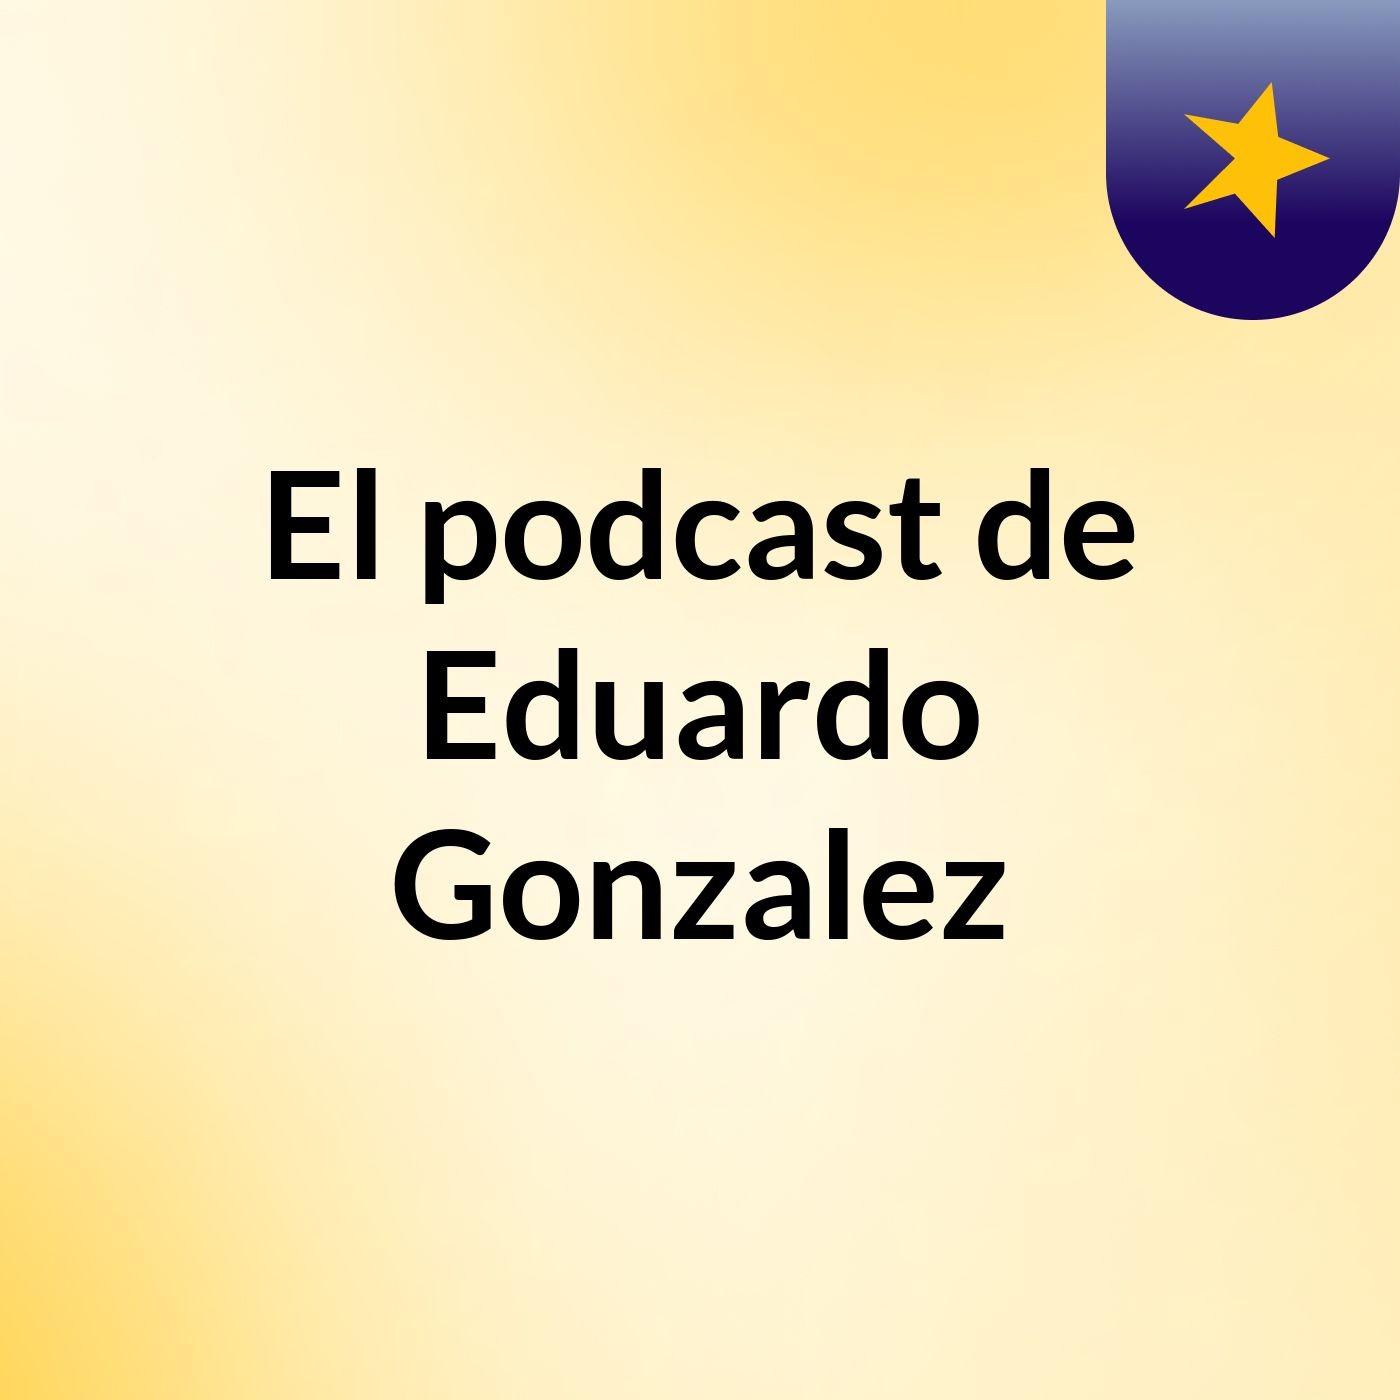 El podcast de Eduardo Gonzalez